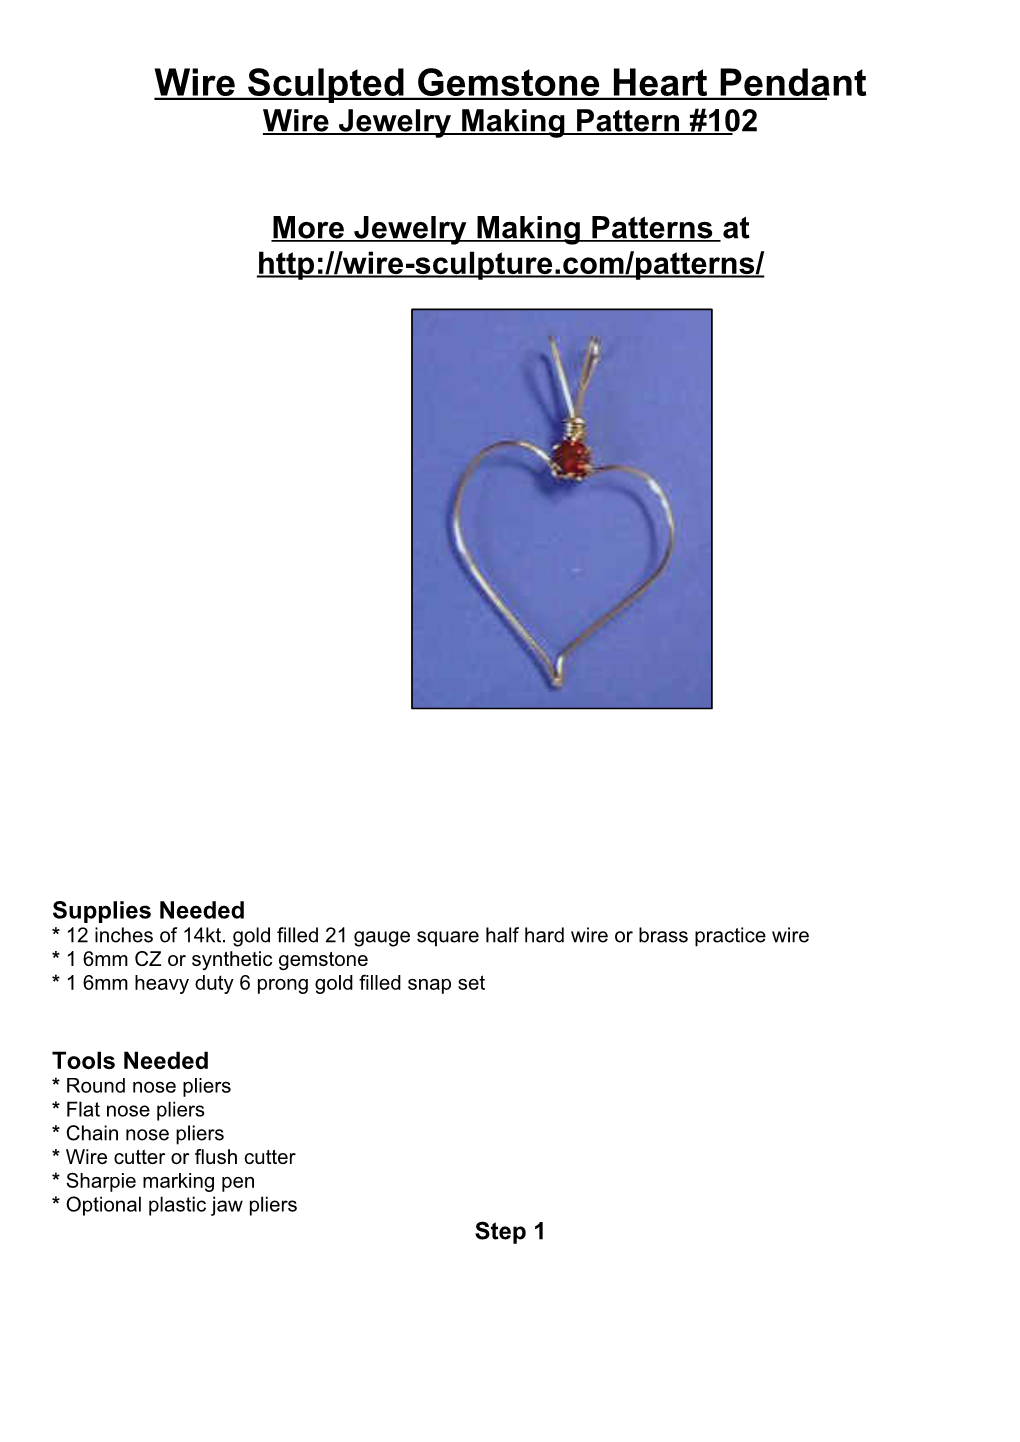 Wire Sculpted Gemstone Heart Pendant Wire Jewelry Making Pattern #102